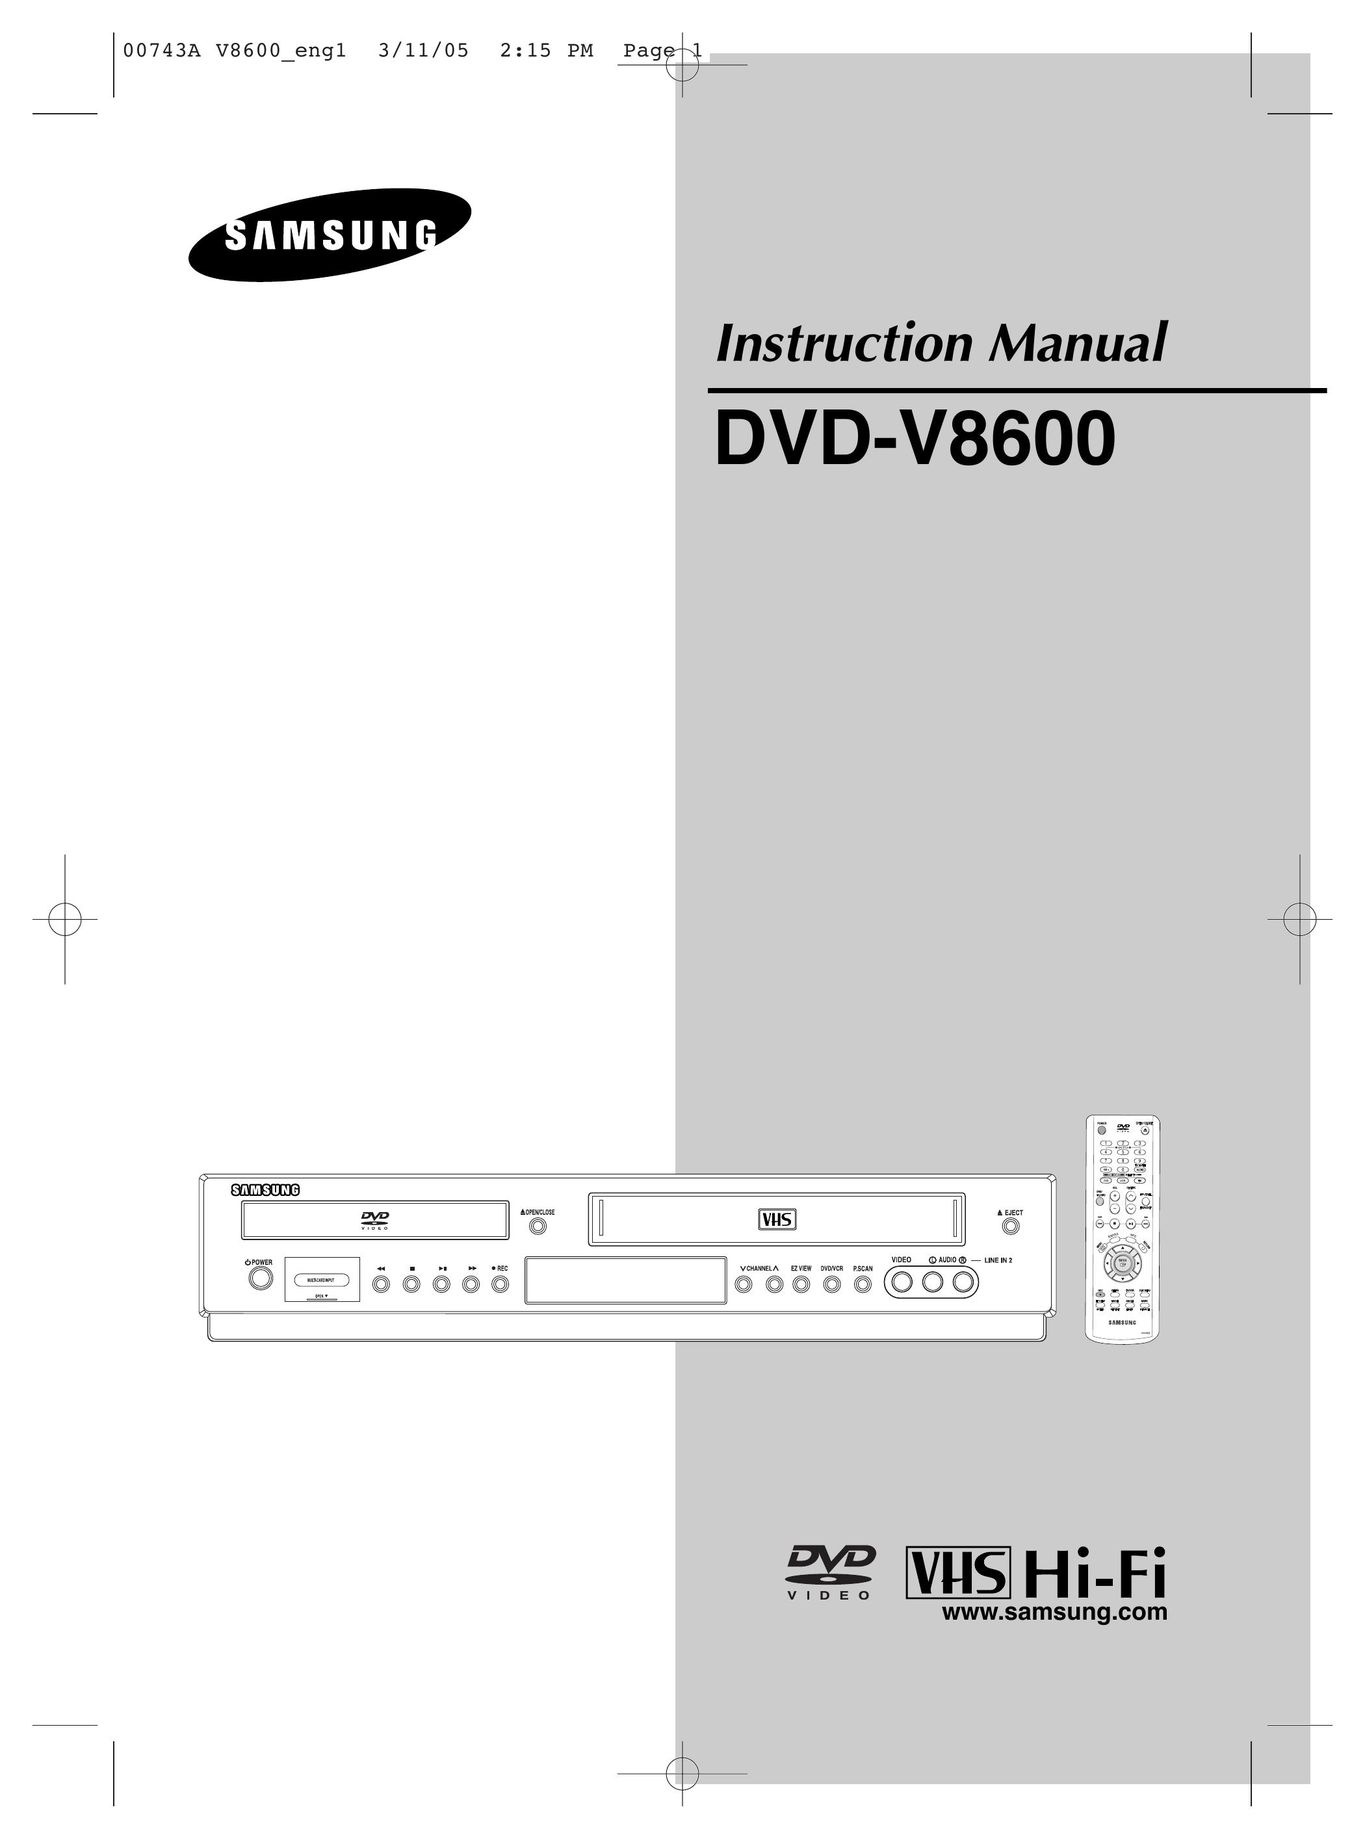 Samsung DVD-V8600 MP3 Player User Manual